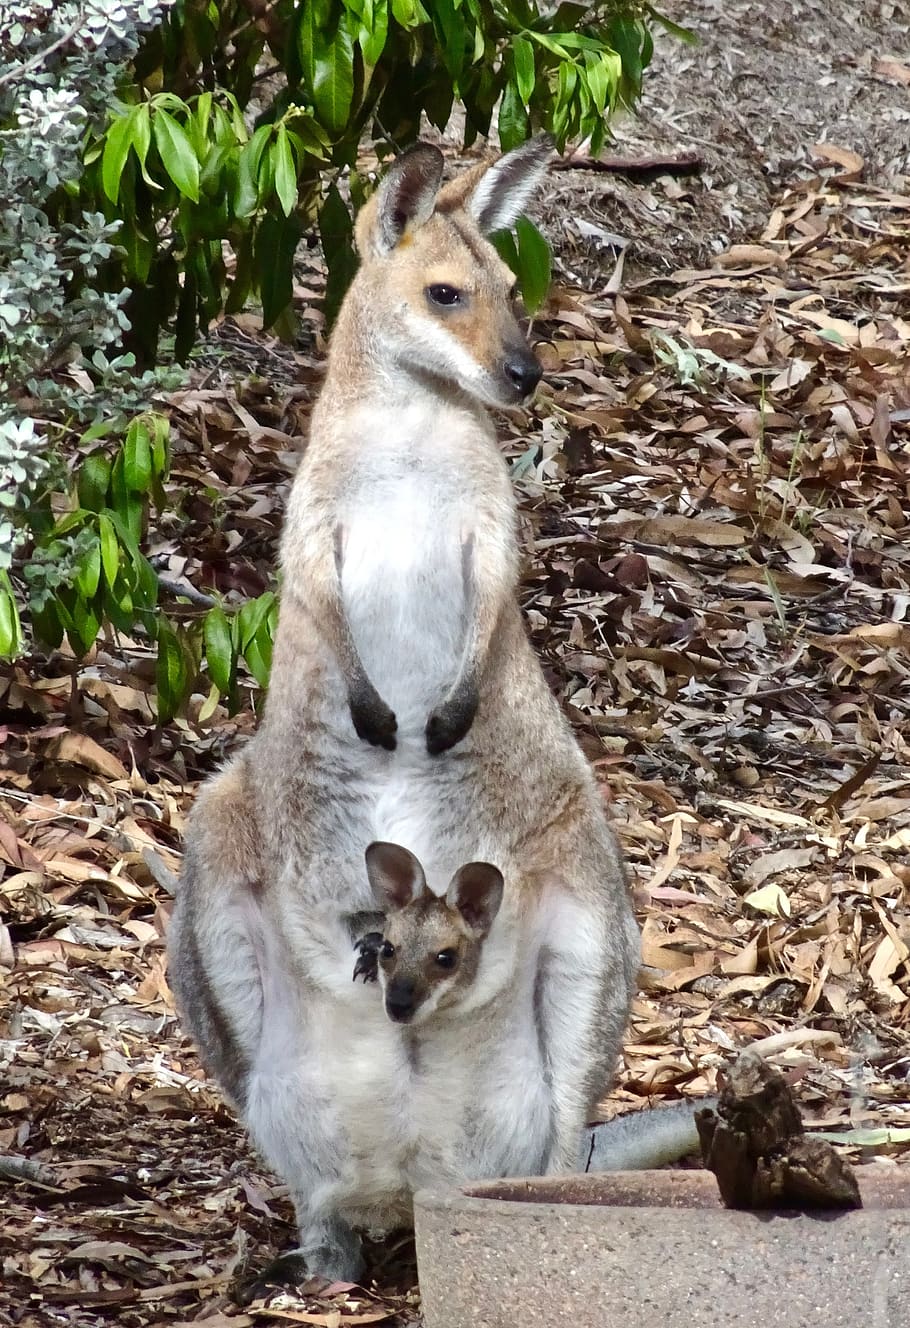 joey, mother, kangaroo, wallaby, marsupial, wildlife, cute